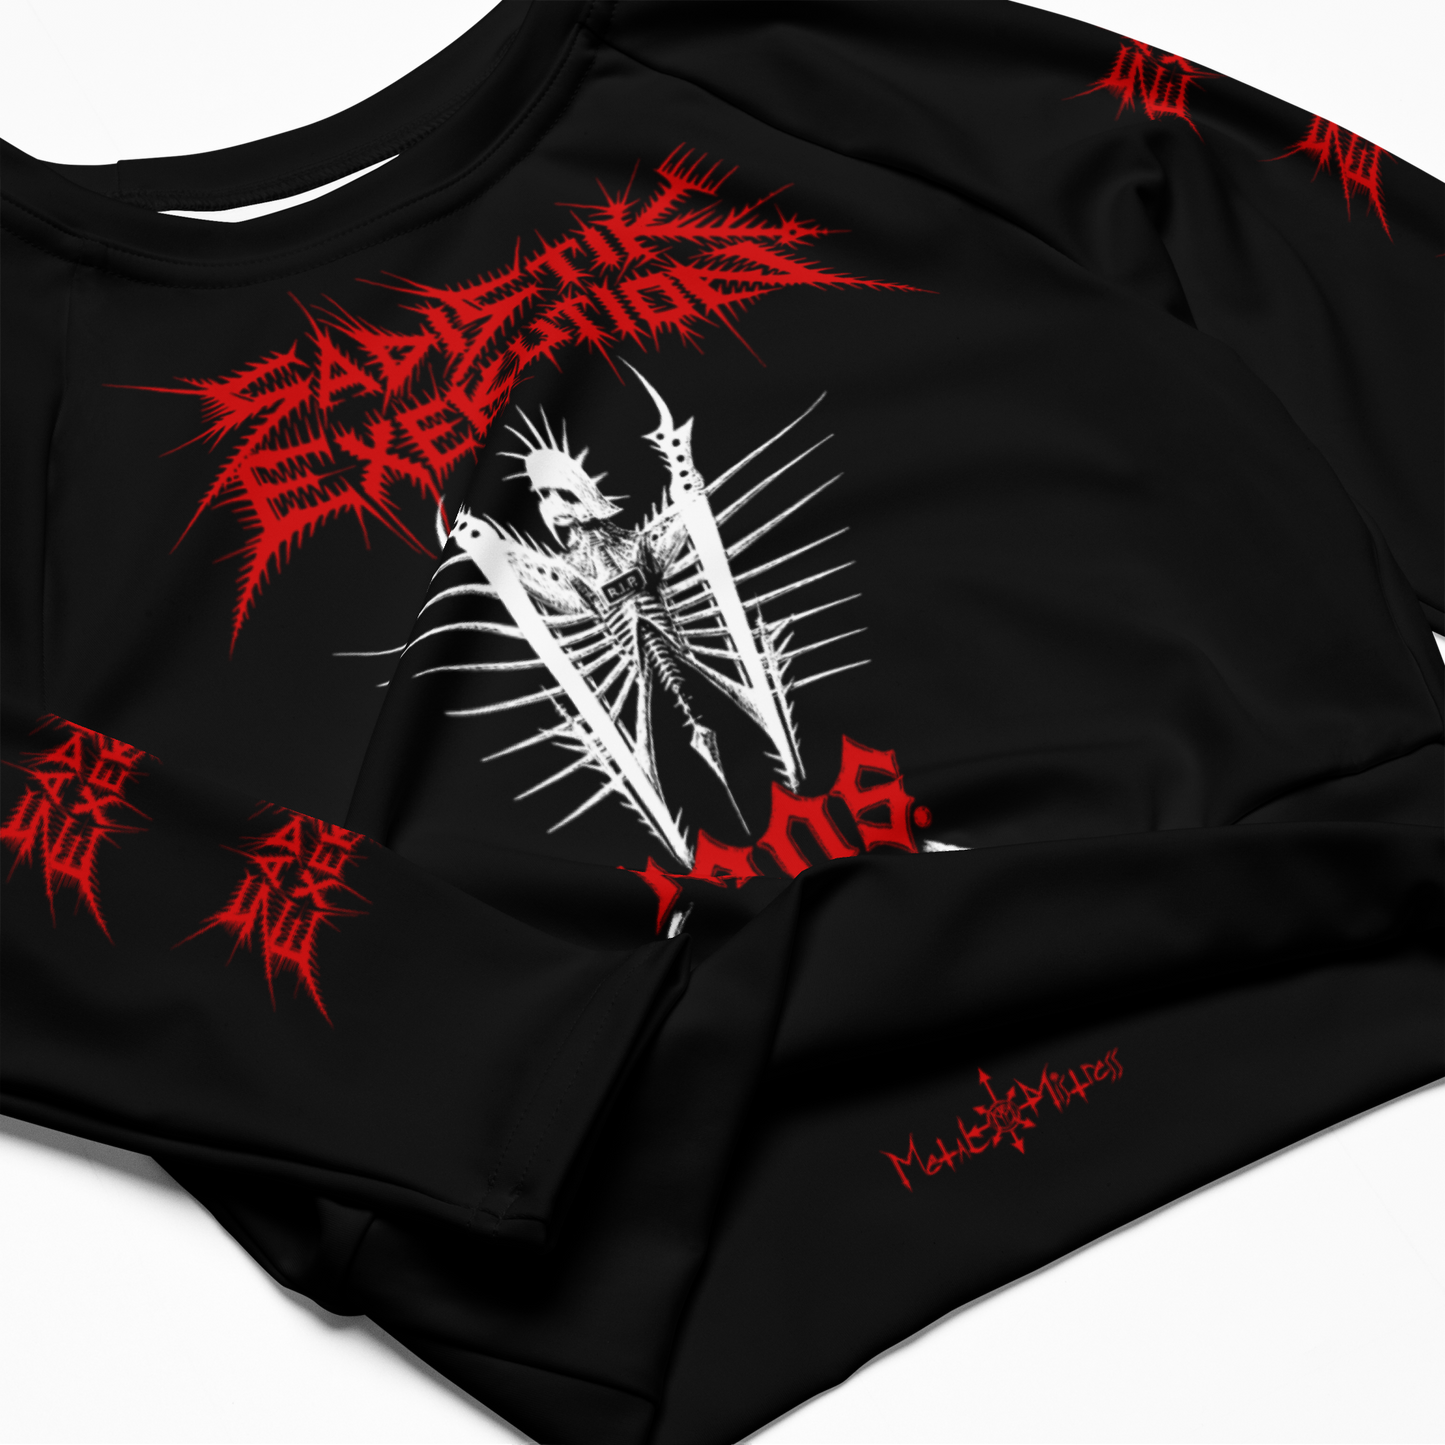 Sadistik Exekution K.A.O.S (Red) Official long sleeve crop top by Metal Mistress